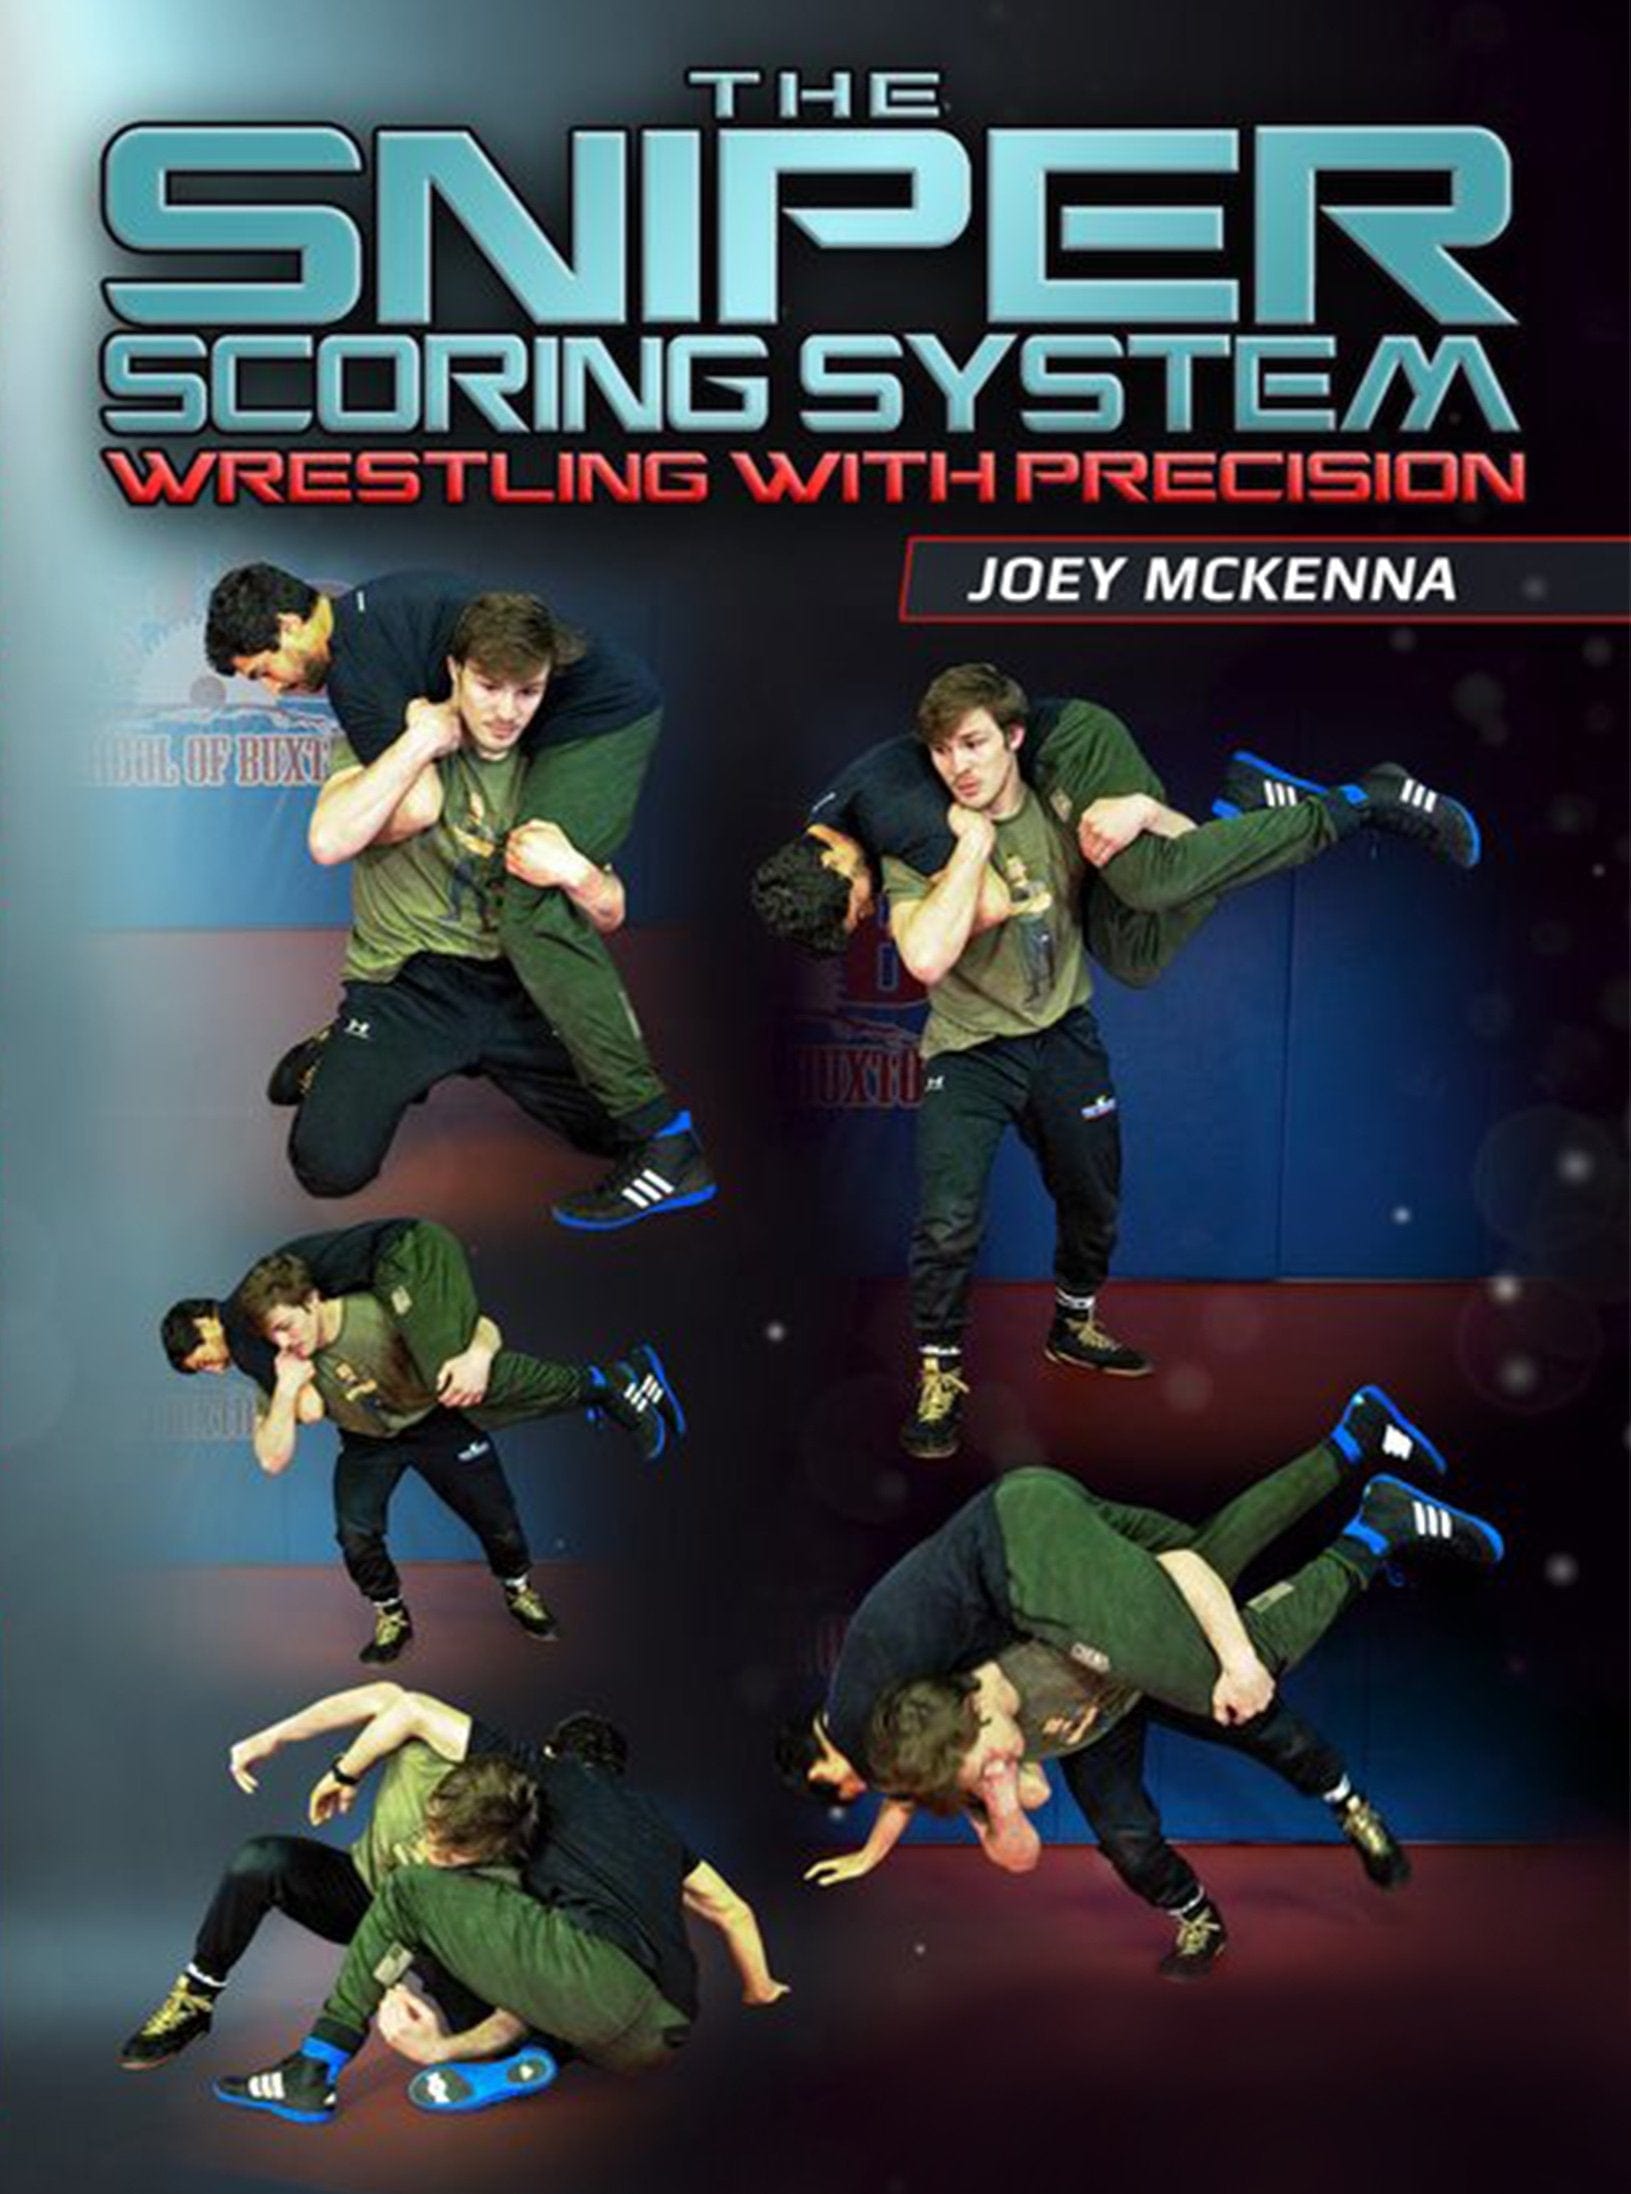 The Sniper Scoring System by Joey McKenna - Fanatic Wrestling